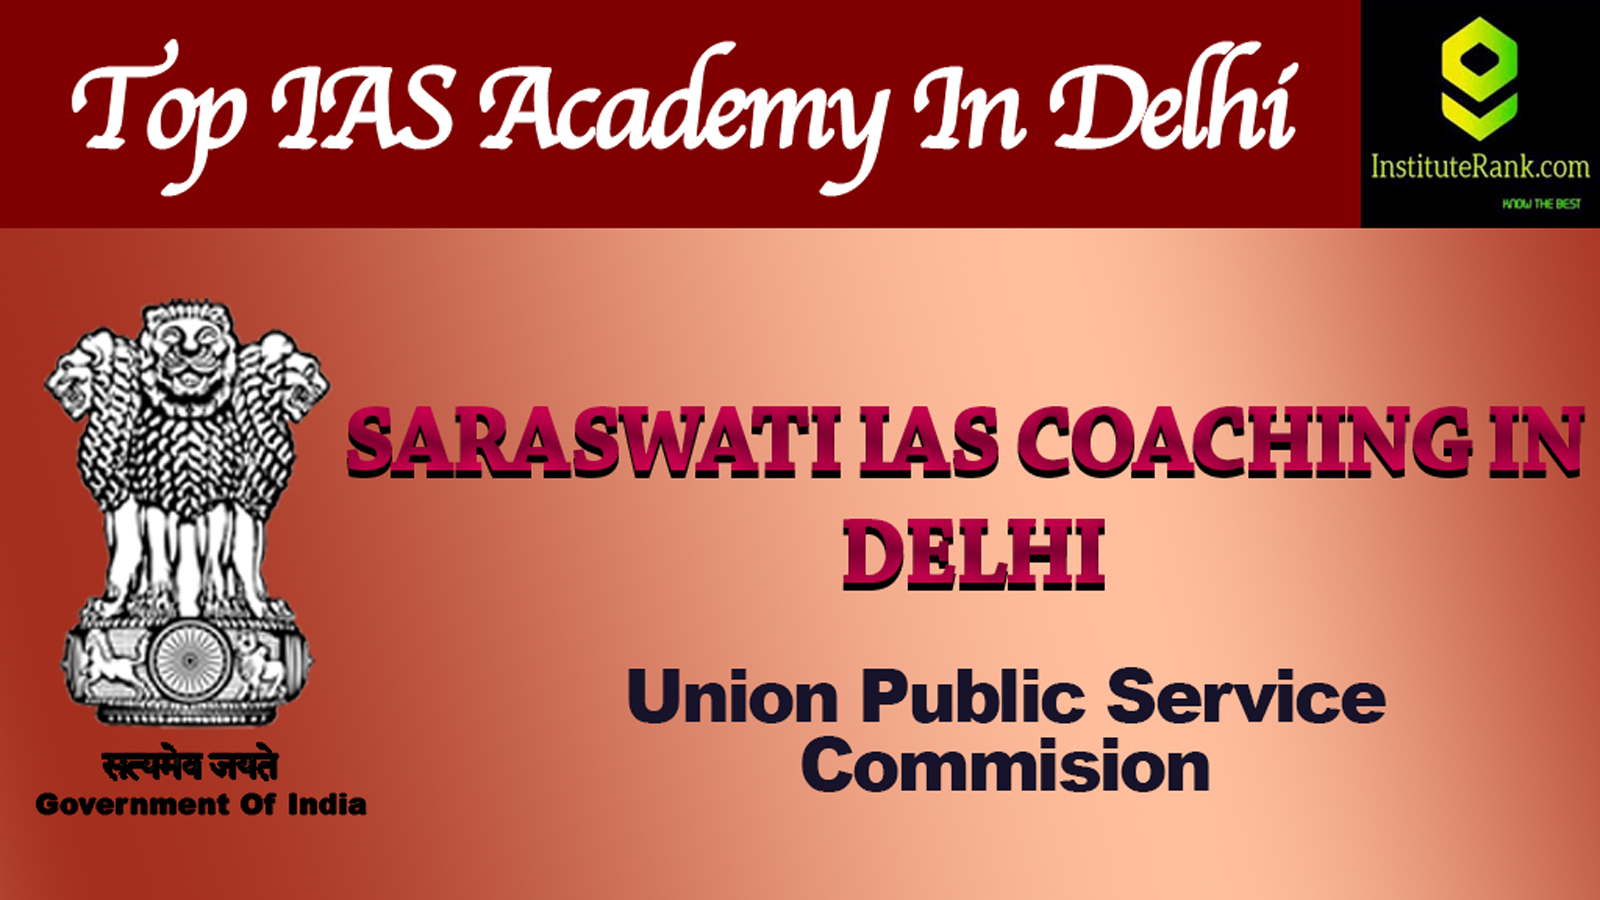 Saraswati IAS Coaching in Delhi